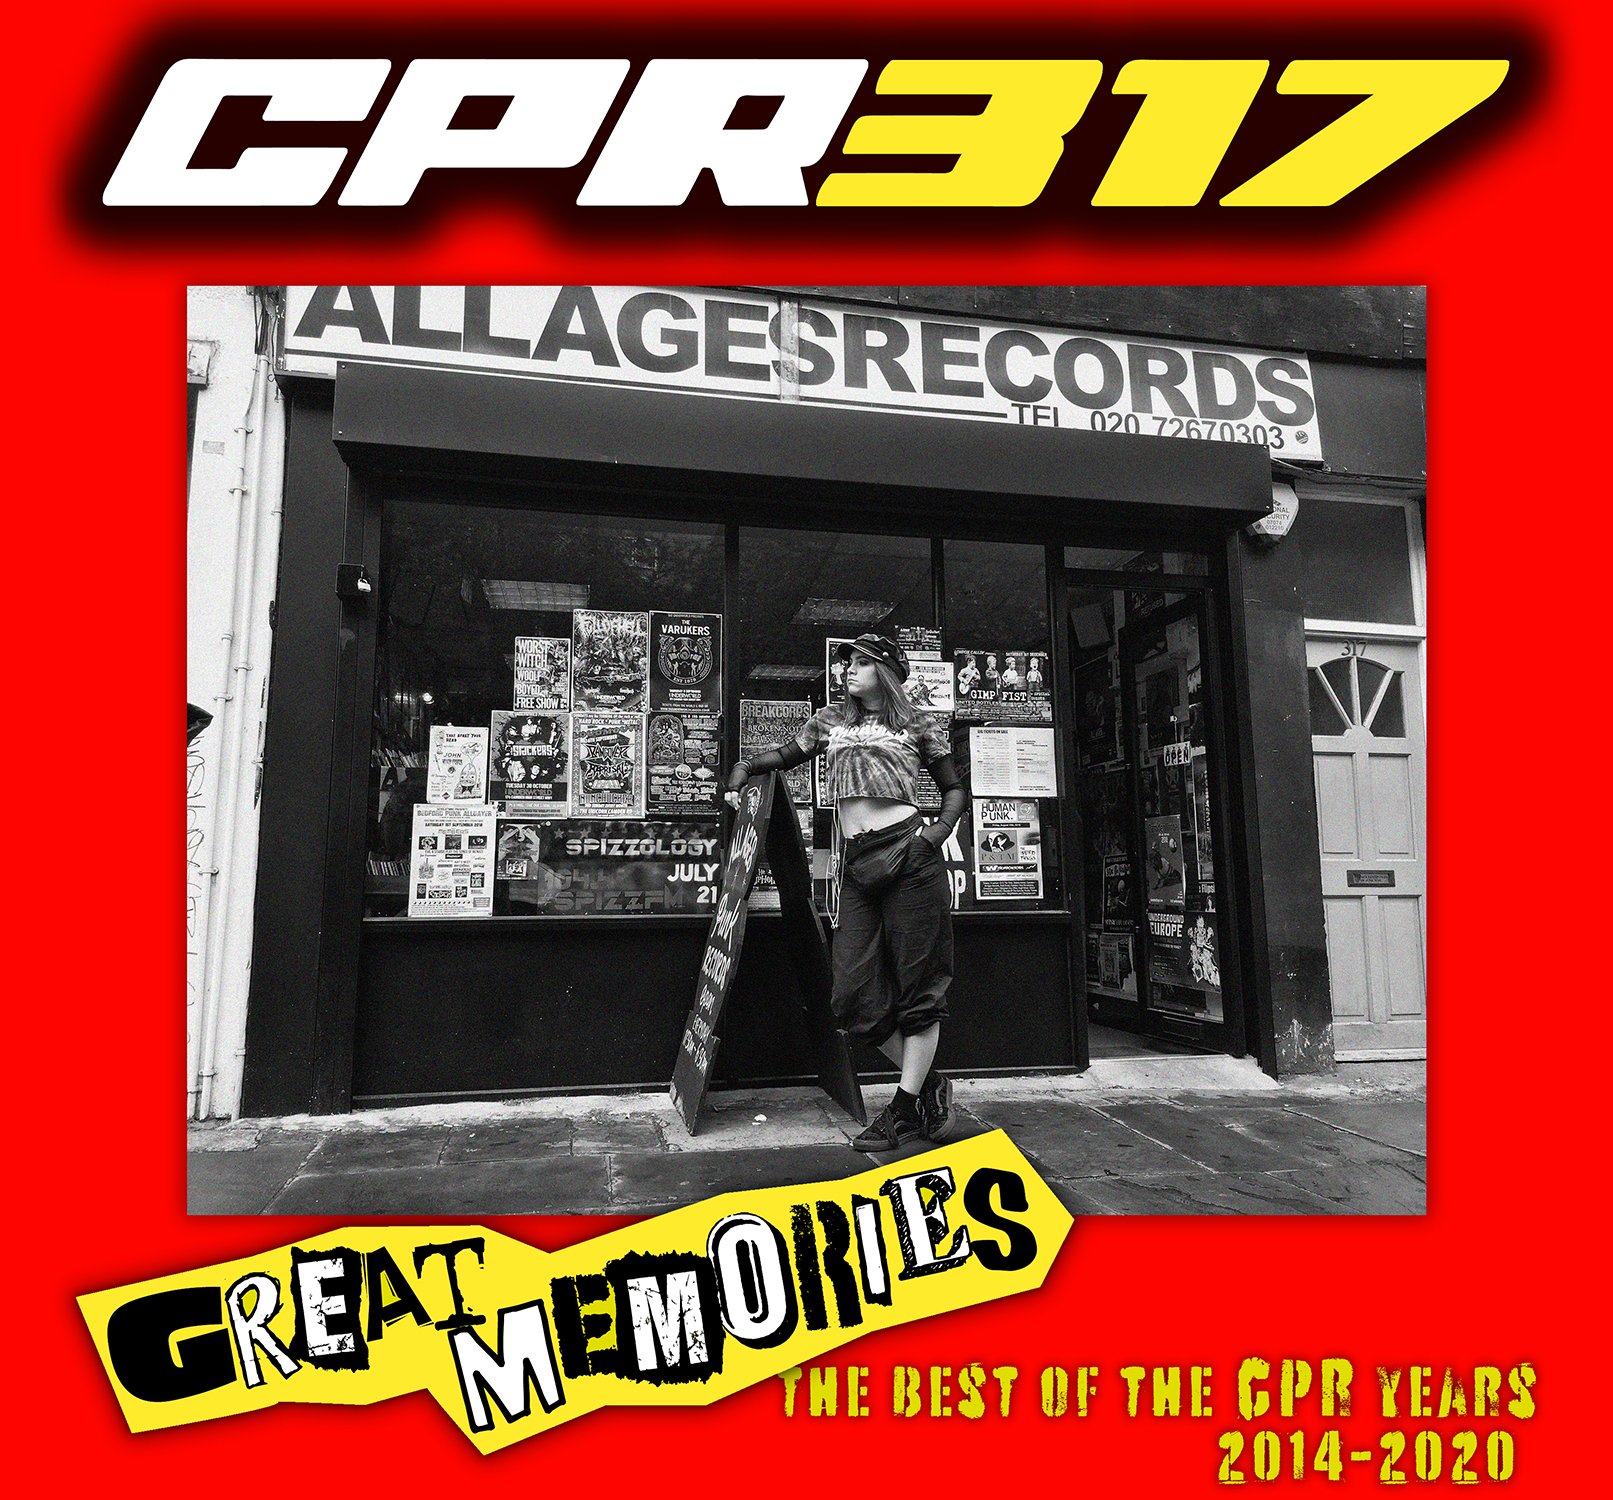 CPR317 - Great Memories cover.jpg